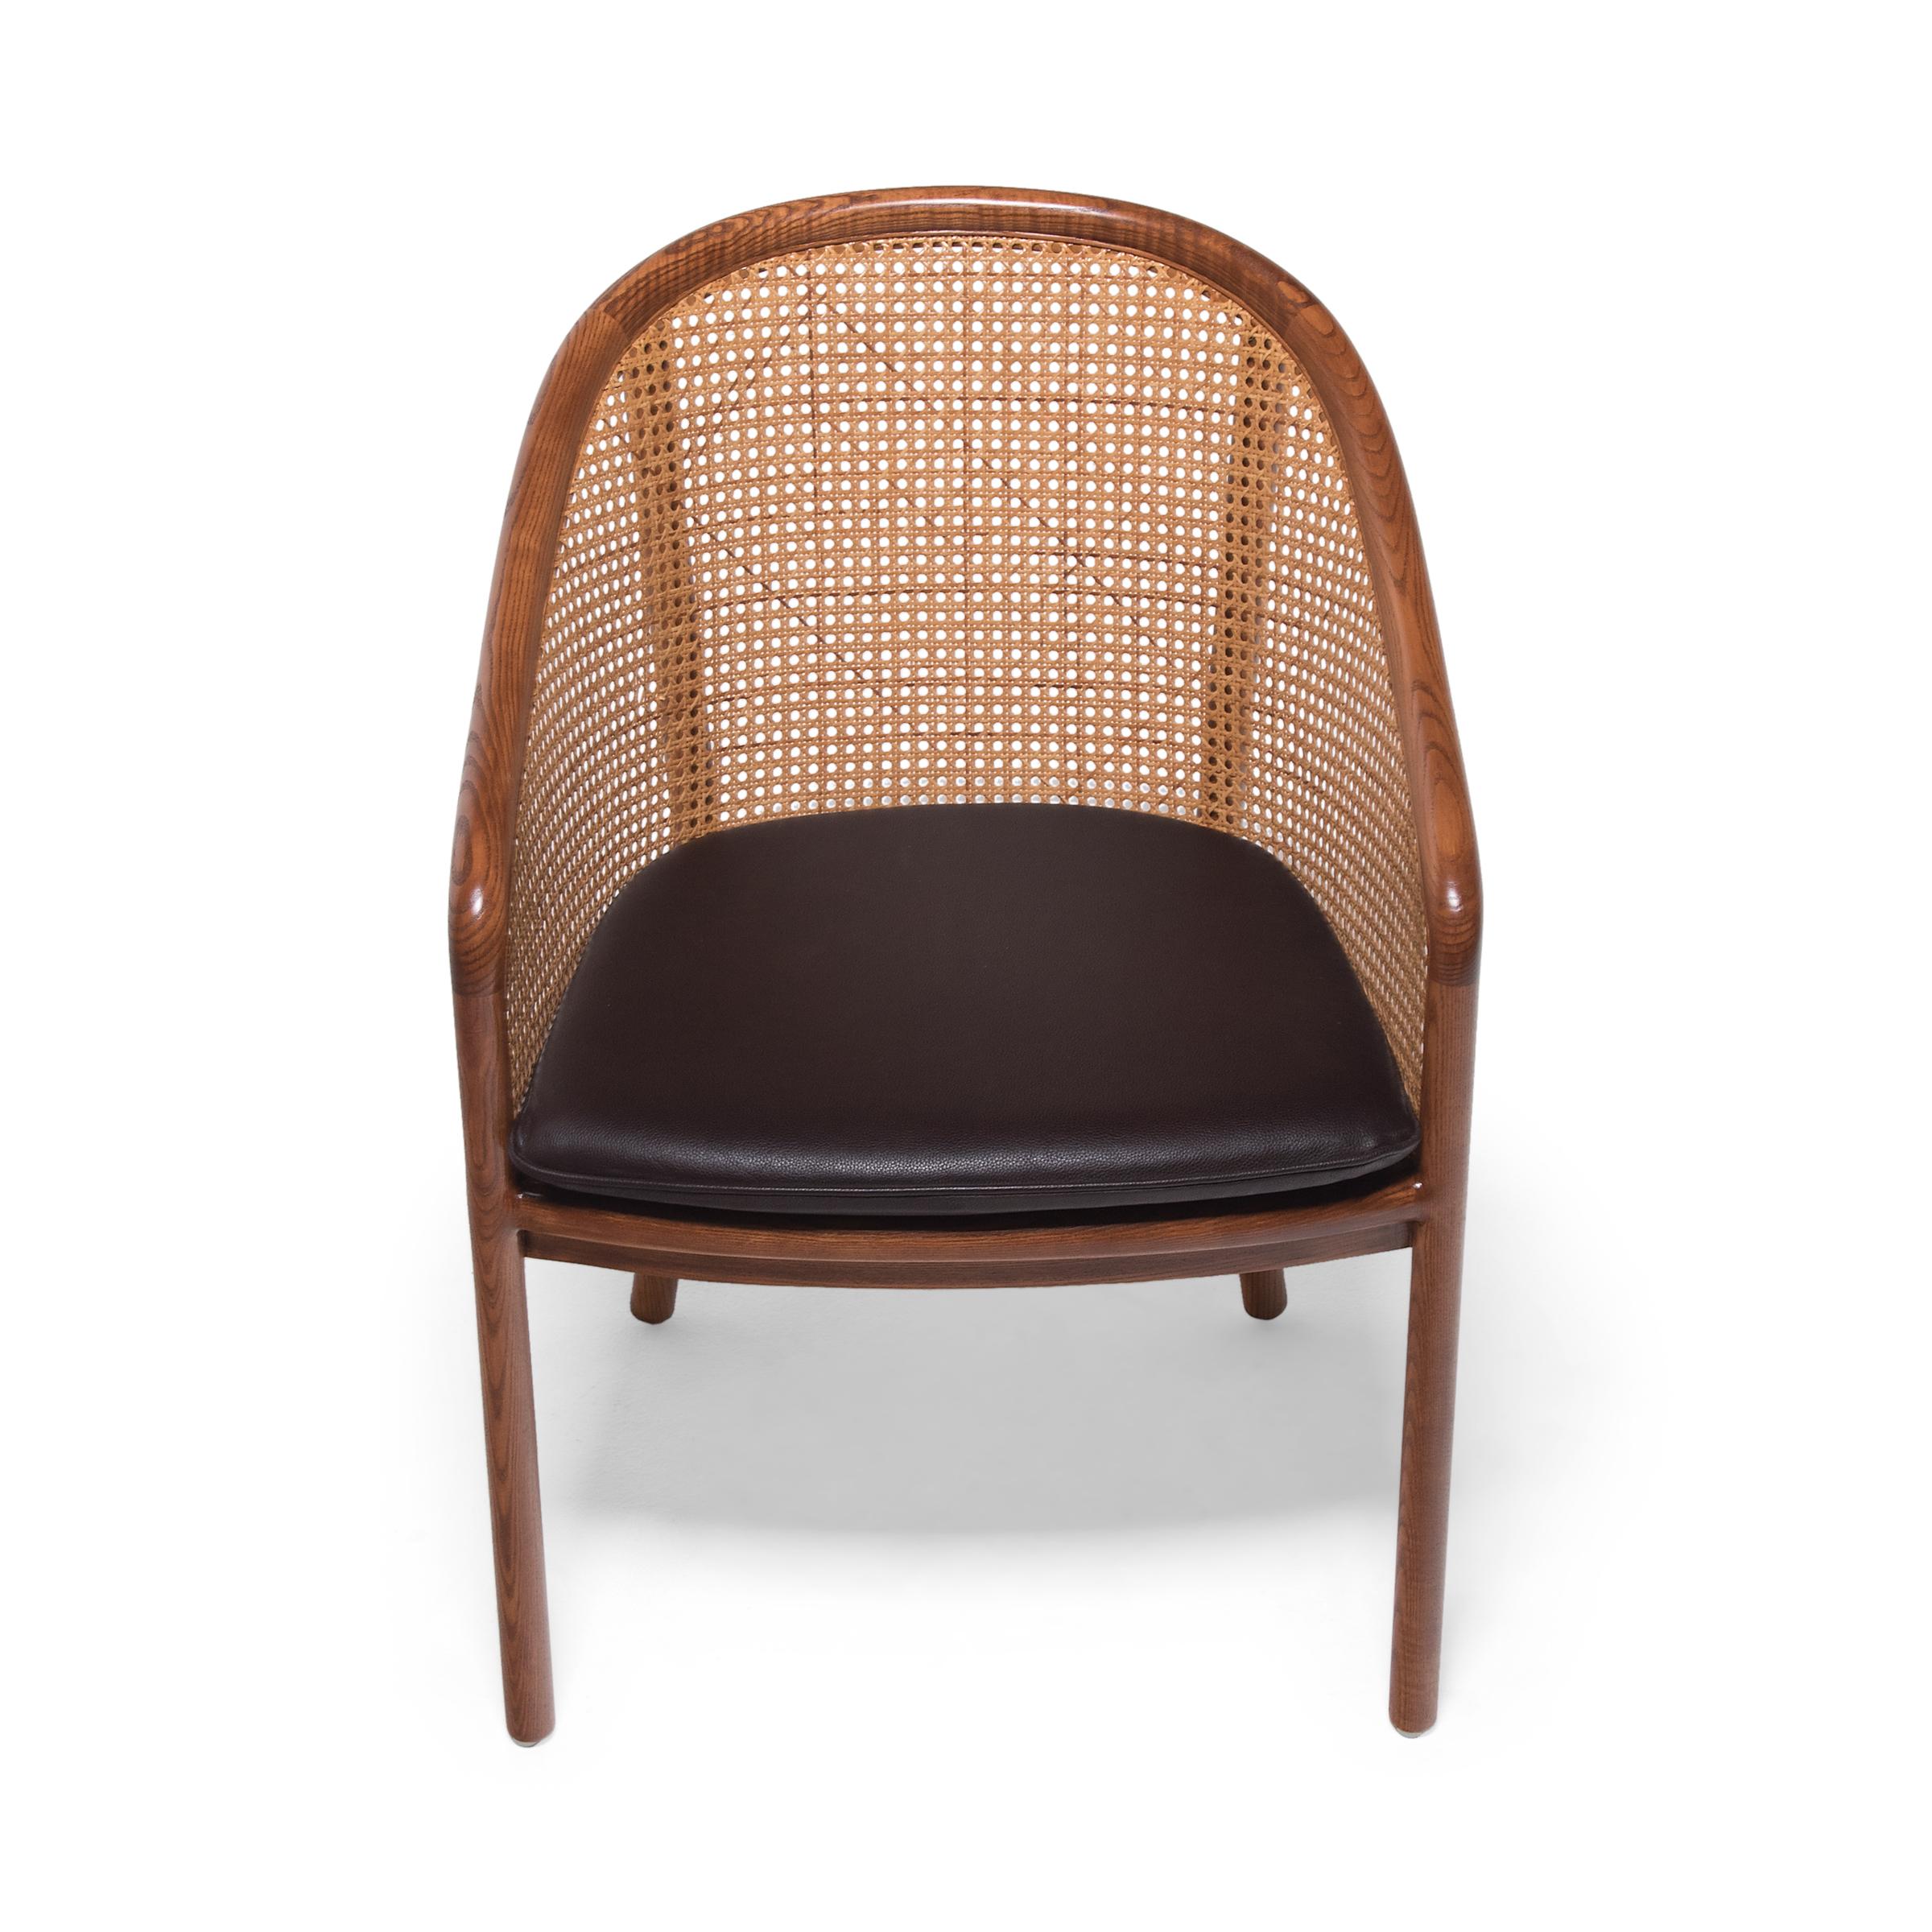 American Ward Bennett Cane Landmark Lounge Chair